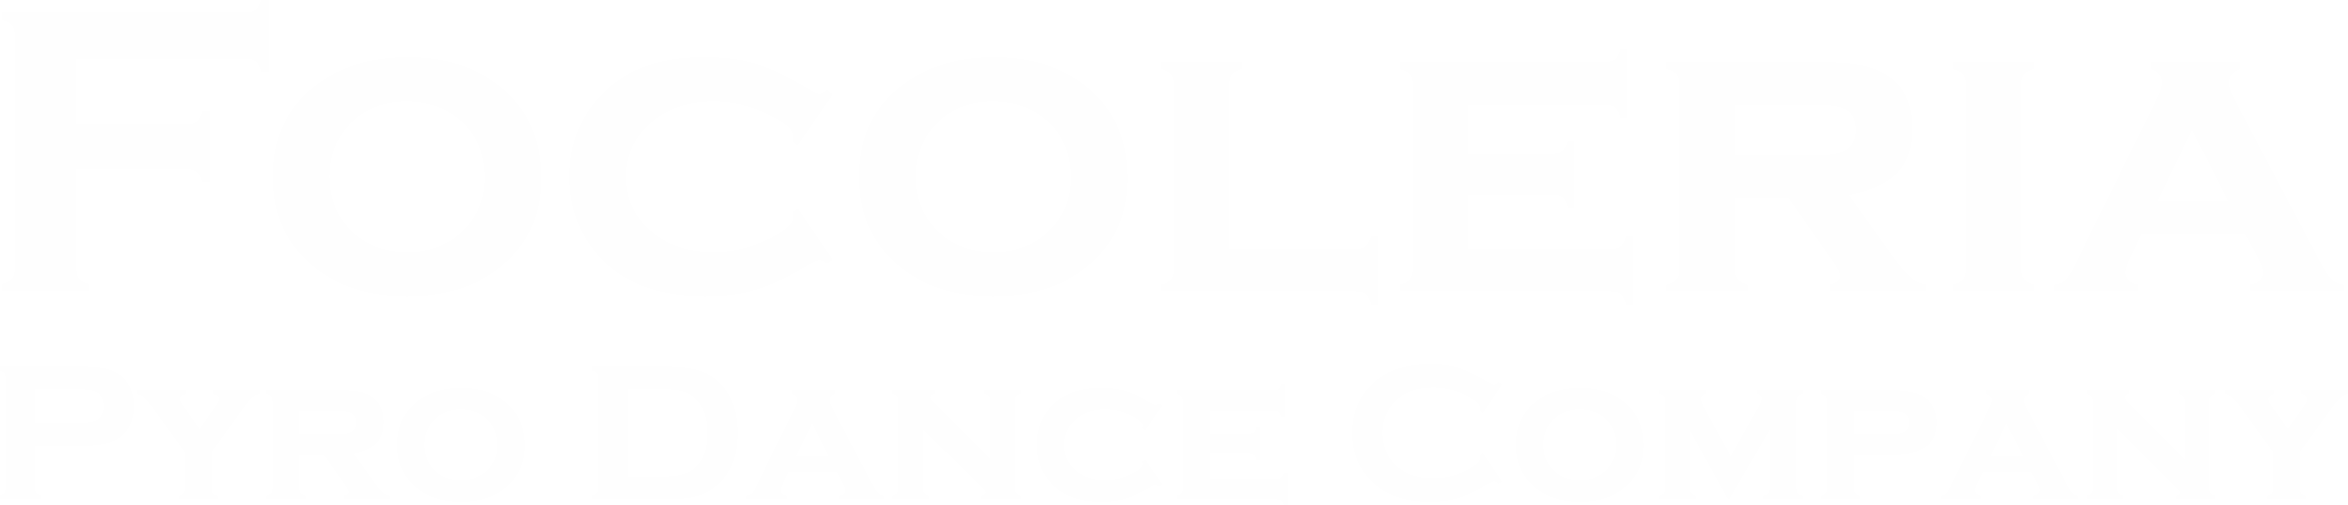 Rook Logo